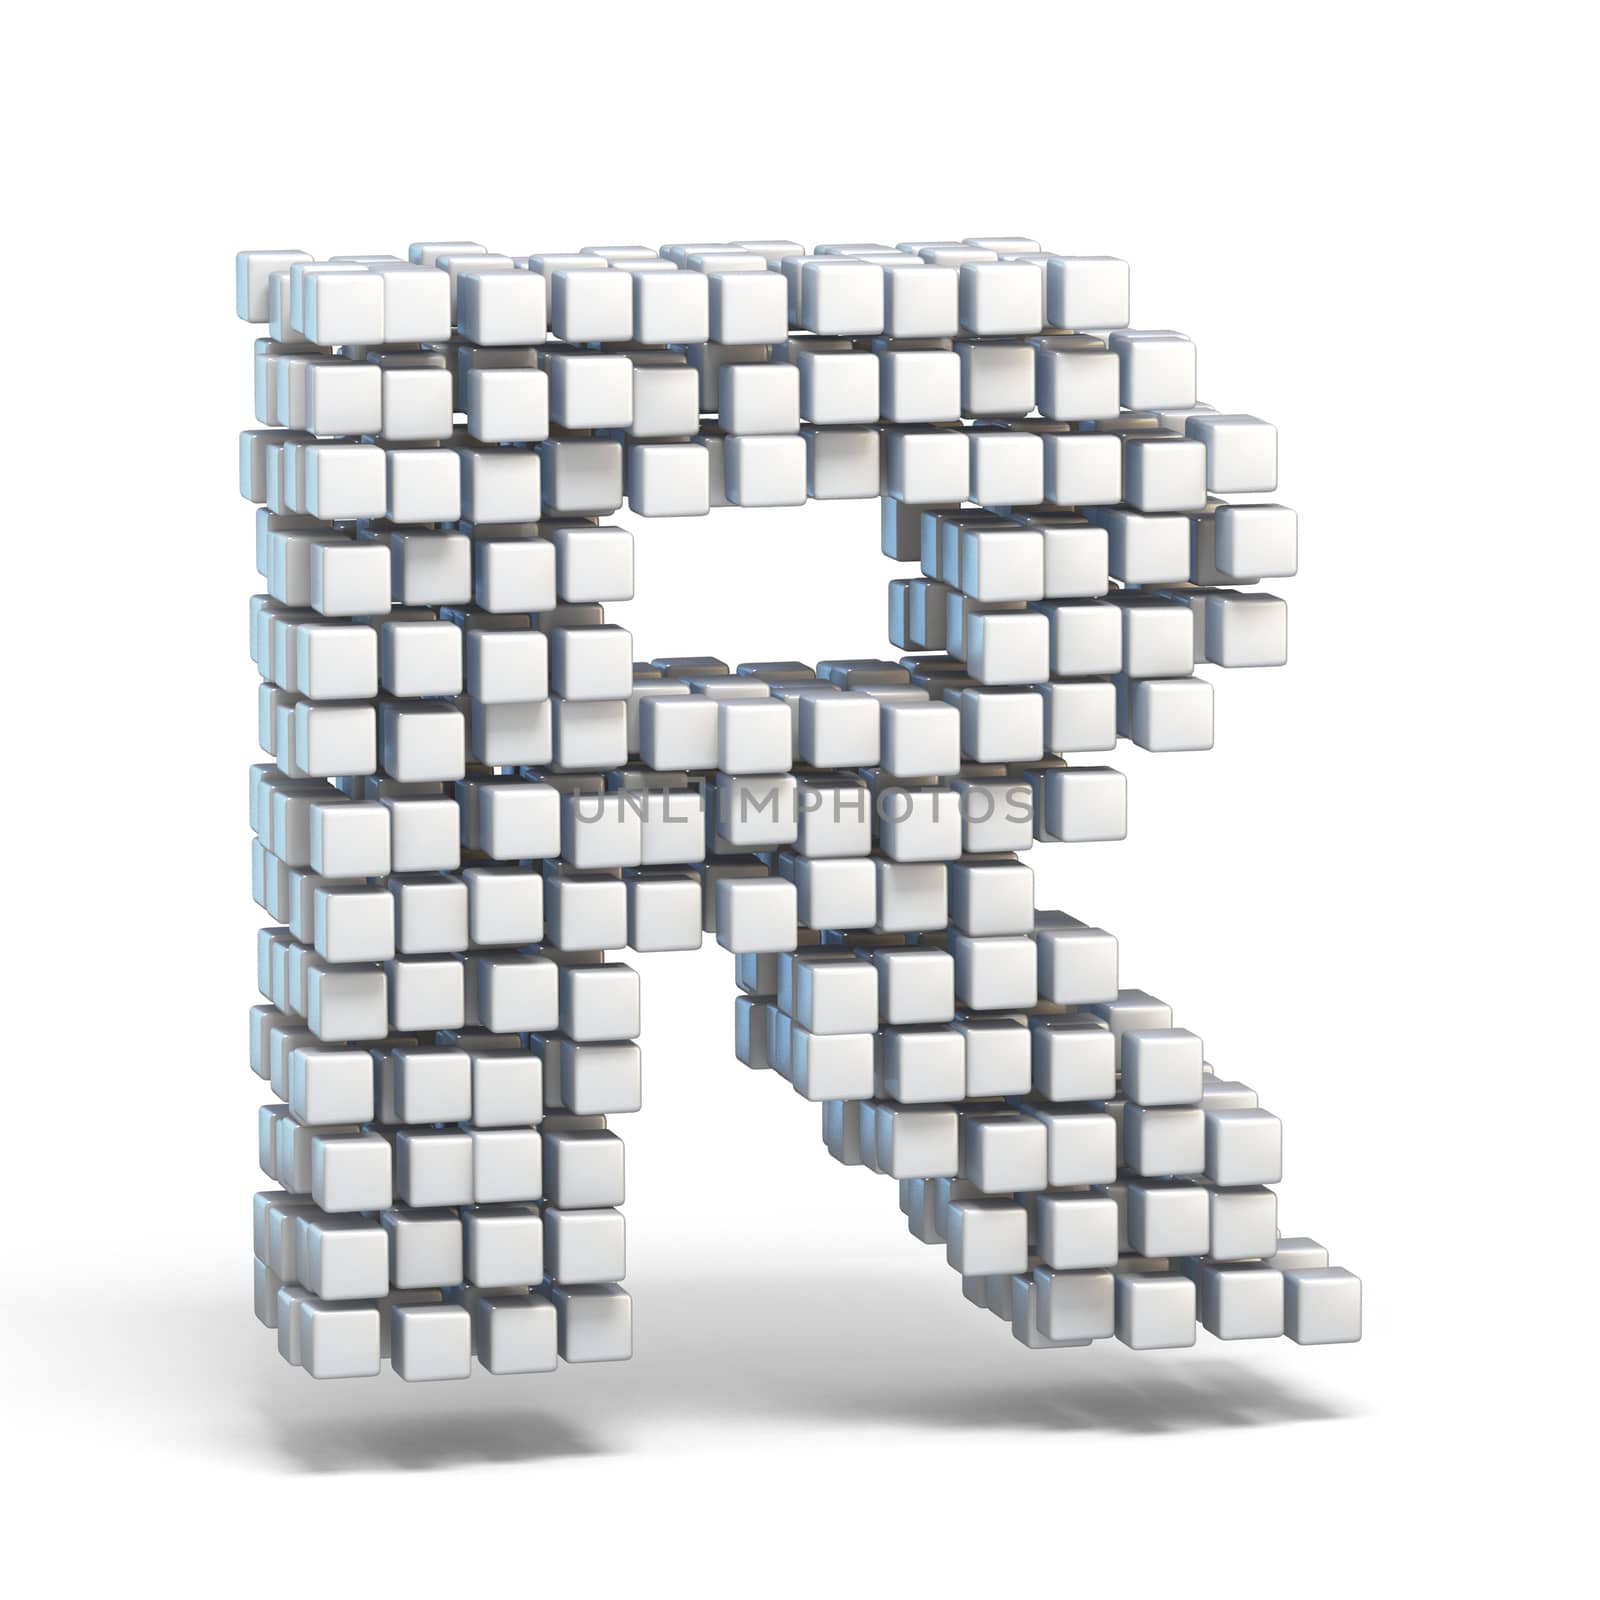 White voxel cubes font Letter R 3D render illustration isolated on white background